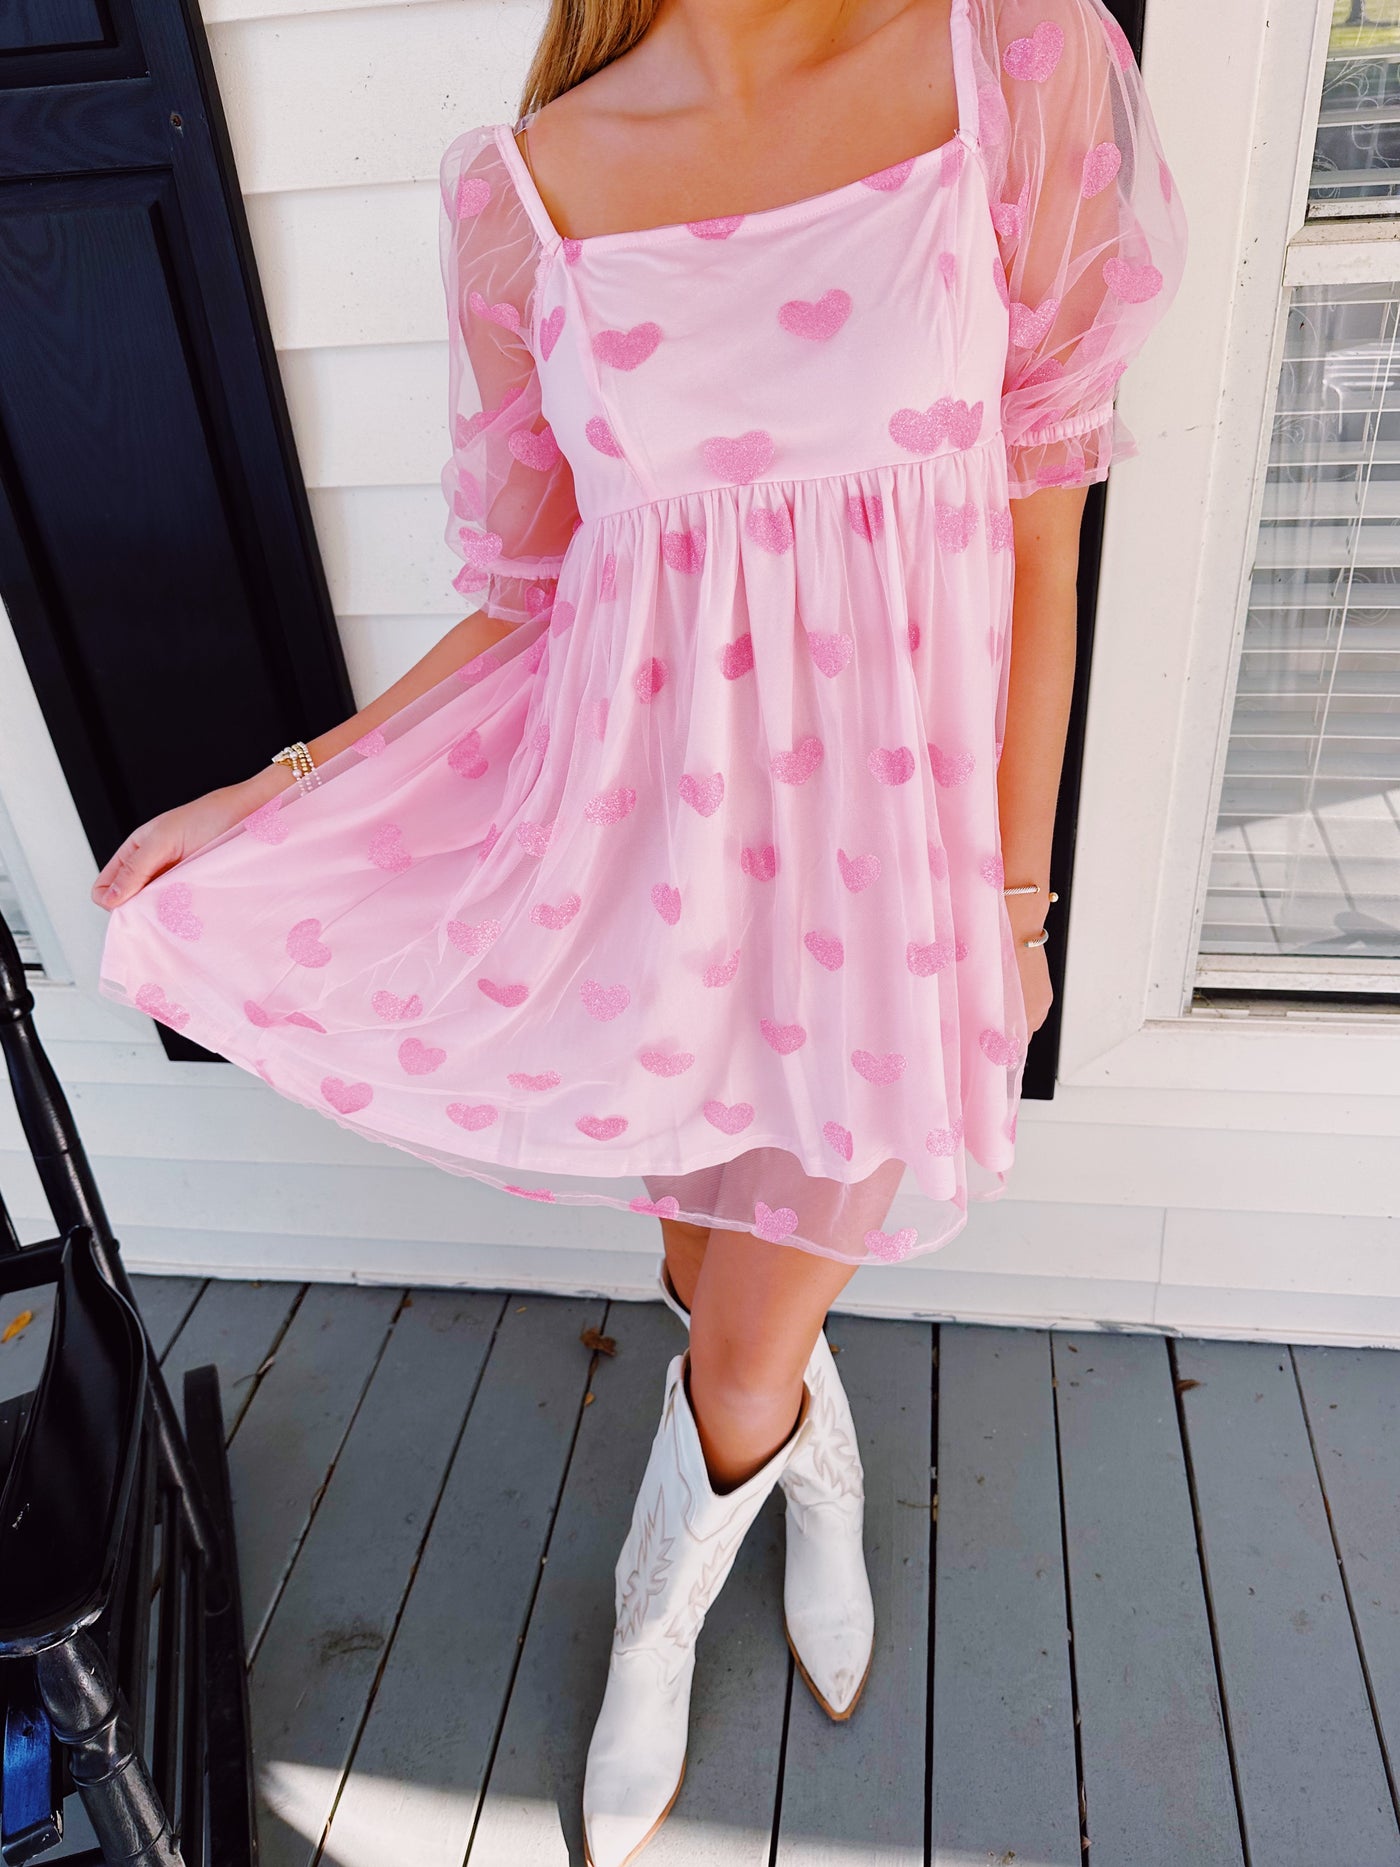 Kaylee Sparkling Glitter Heart Patch Baby Doll Dress